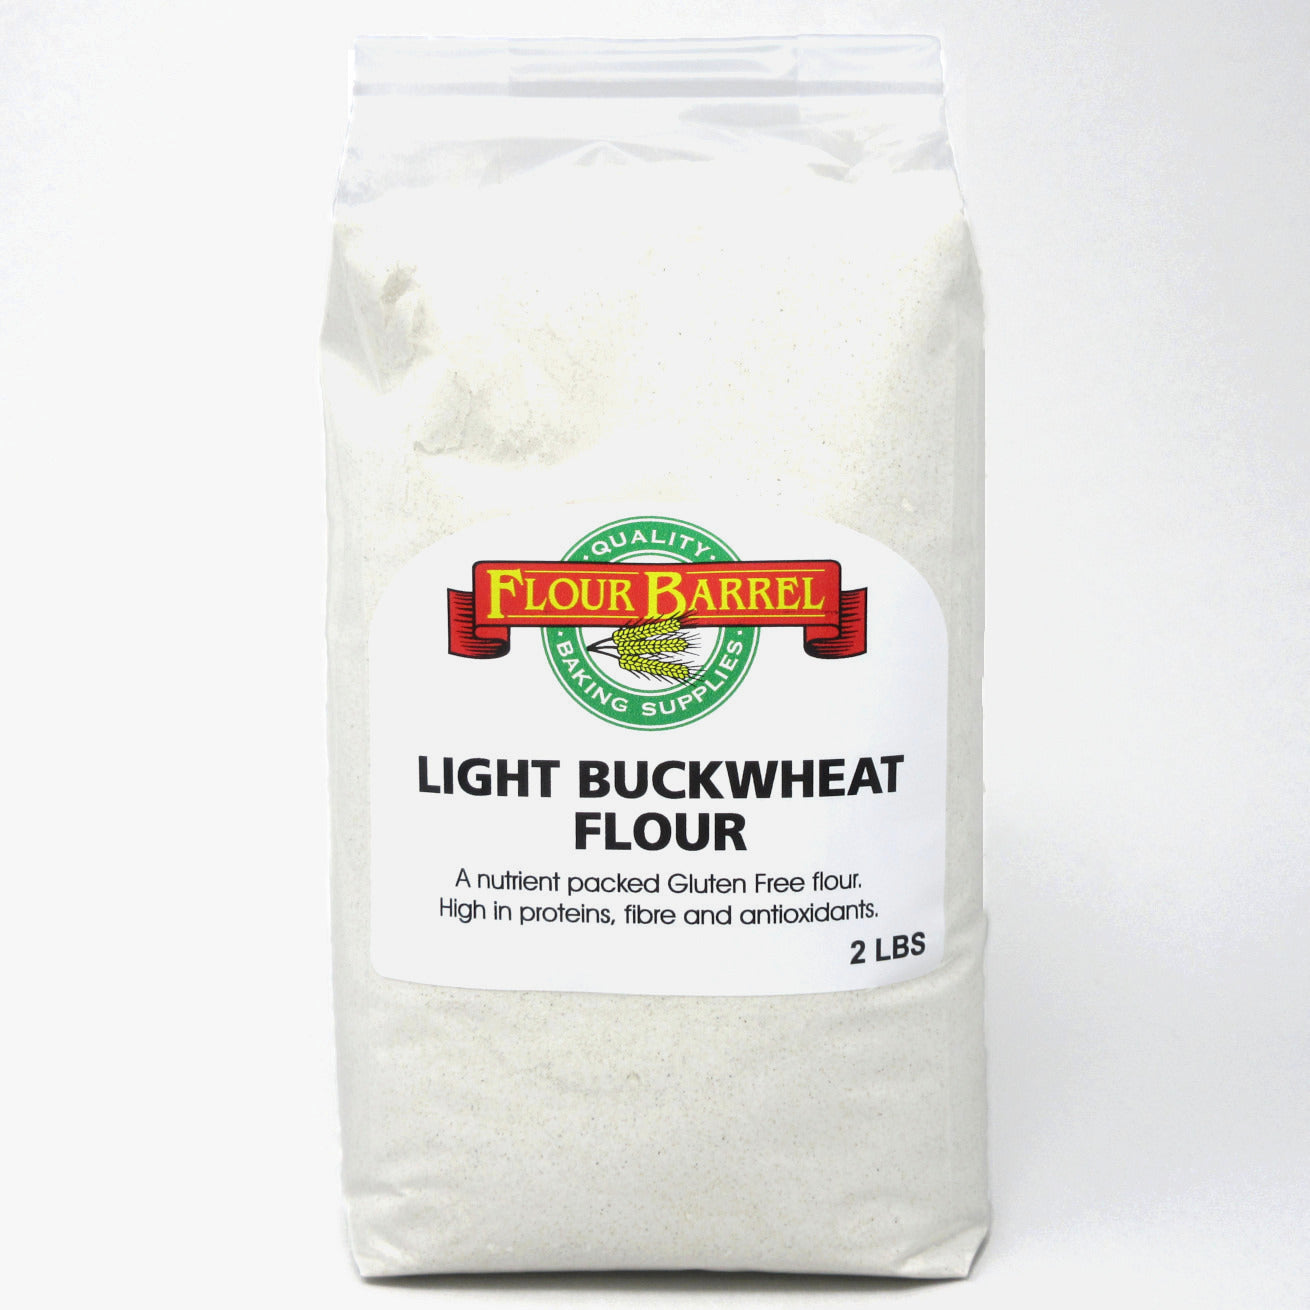 Flour Barrel product image - Light Buckwheat Flour